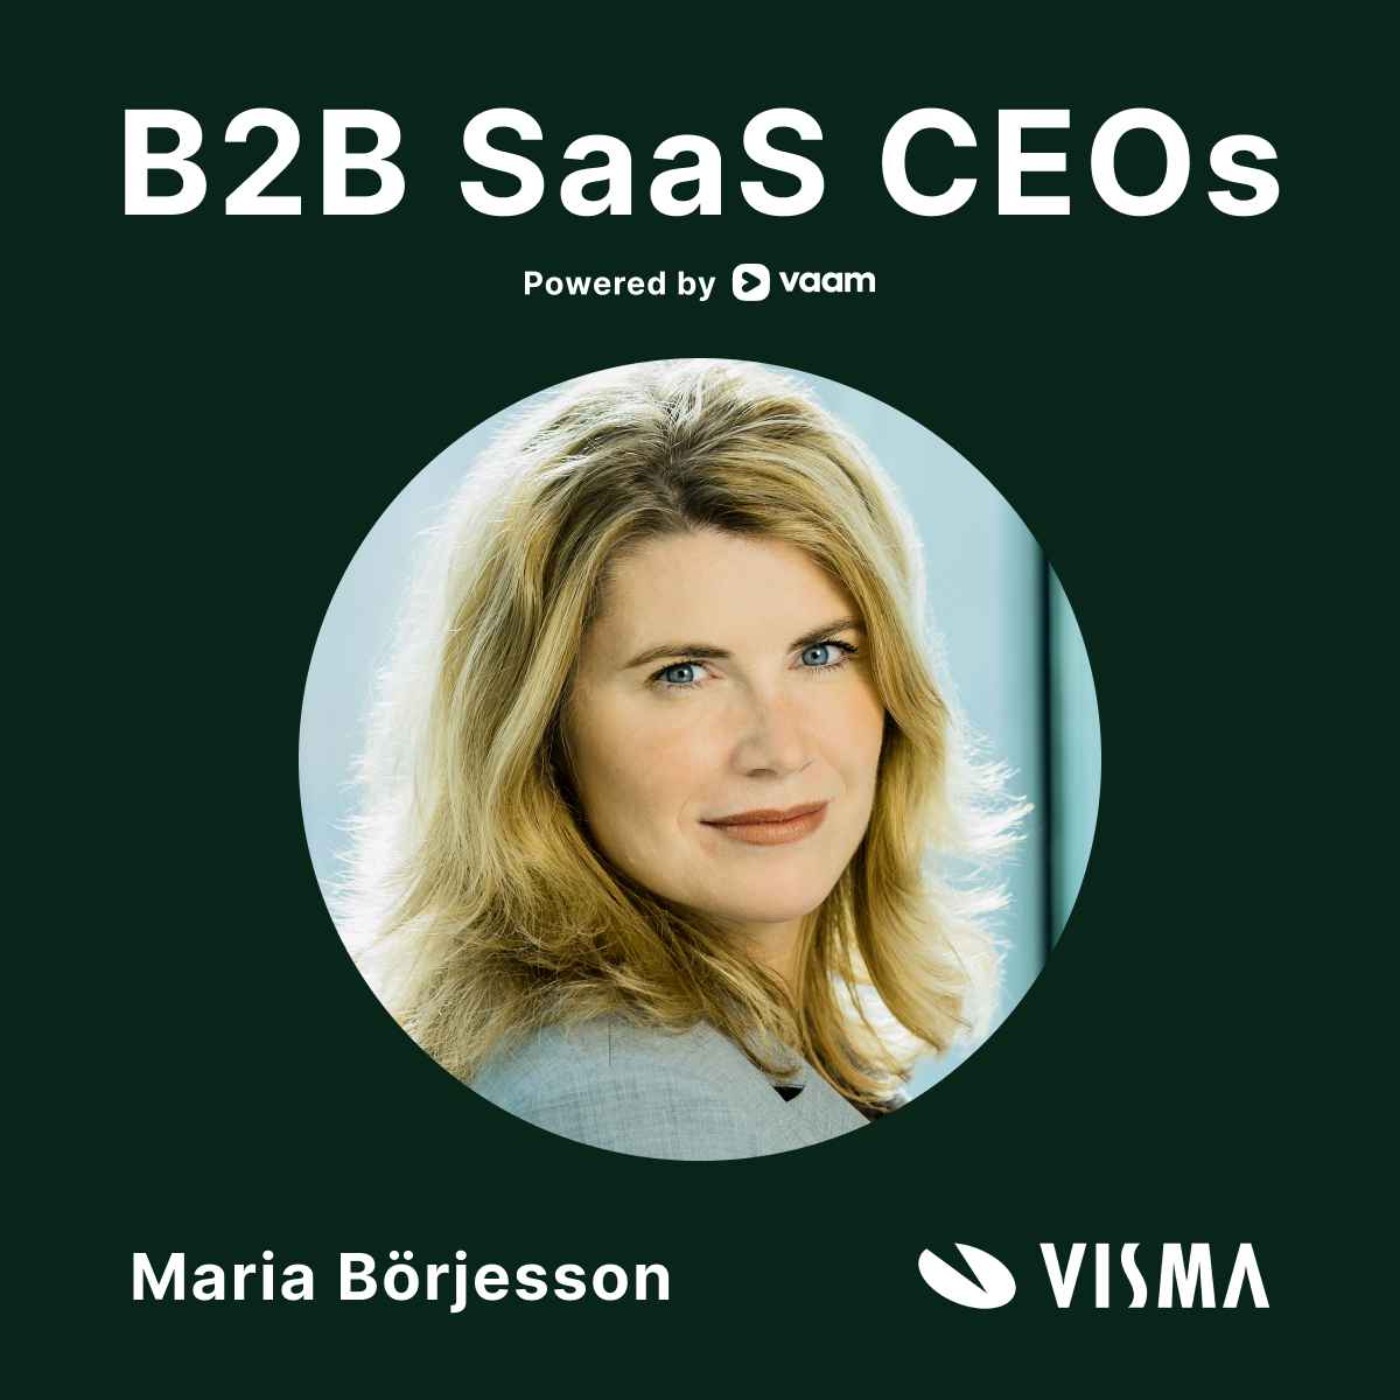 50. Maria Börjesson (Visma Software) - Delegated leadership